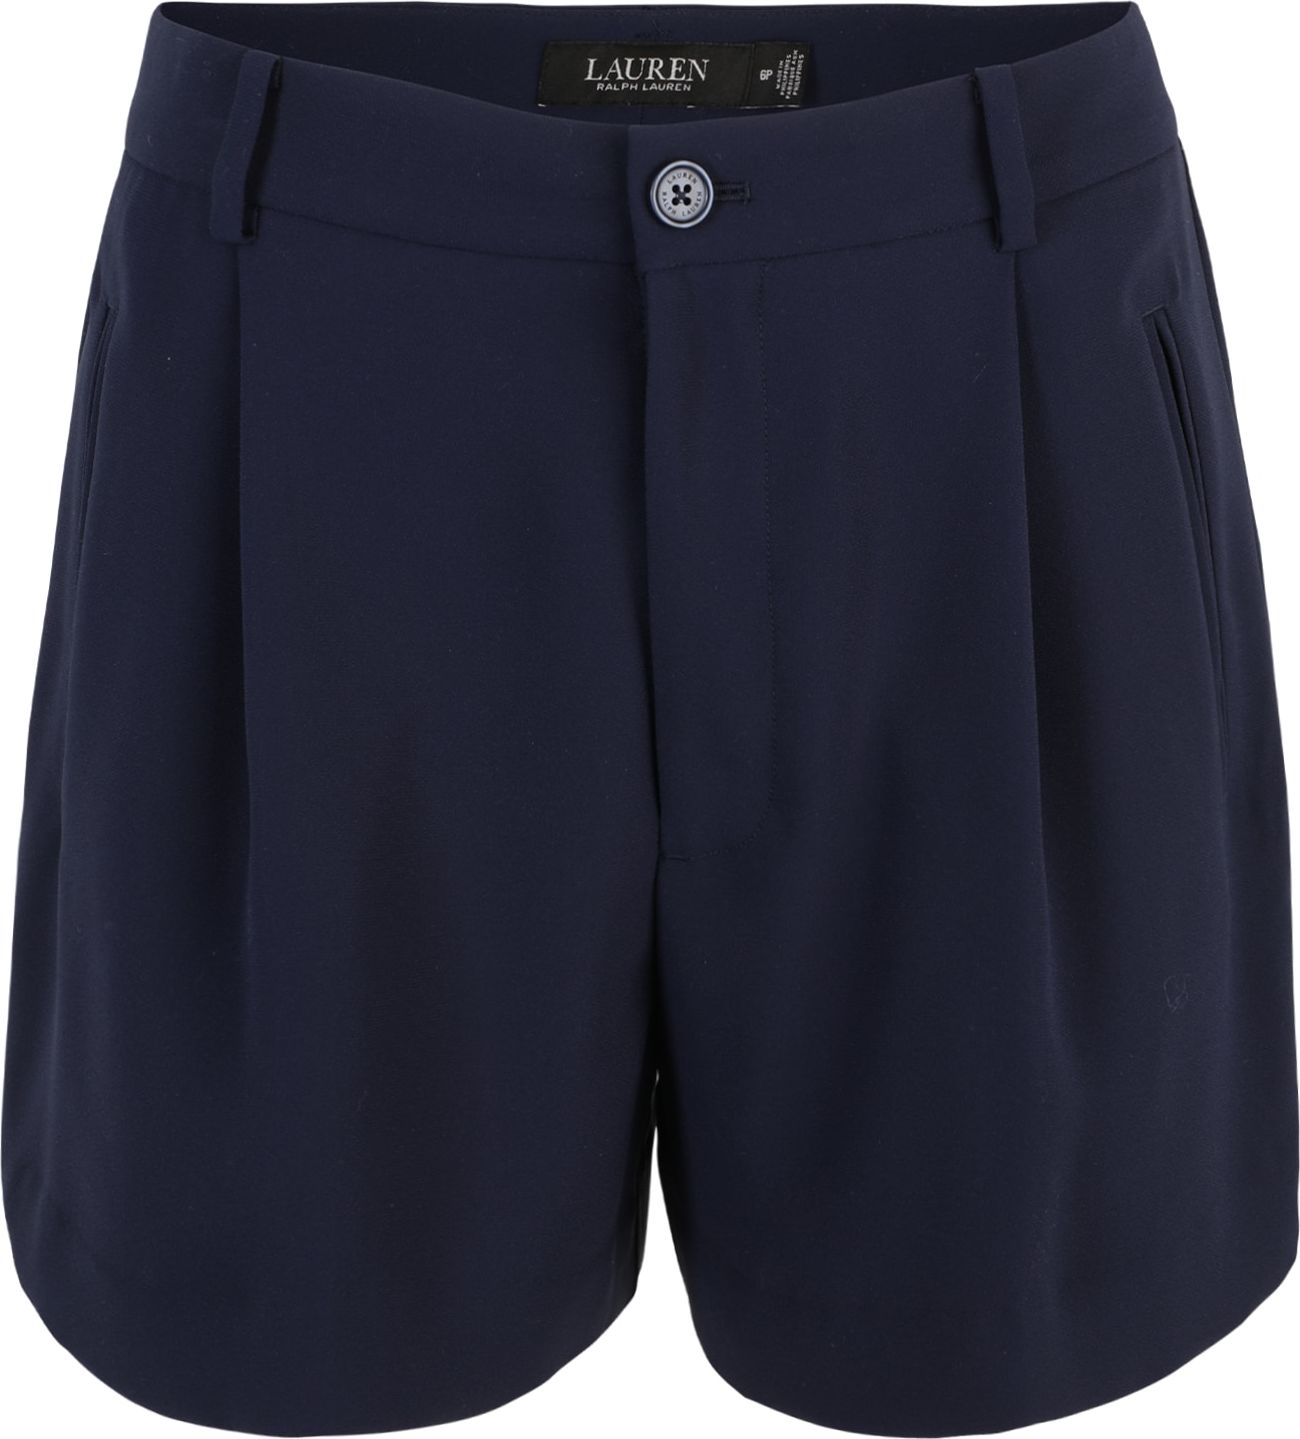 Kalhoty se sklady v pase 'VADIENNE' Lauren Ralph Lauren Petite tmavě modrá